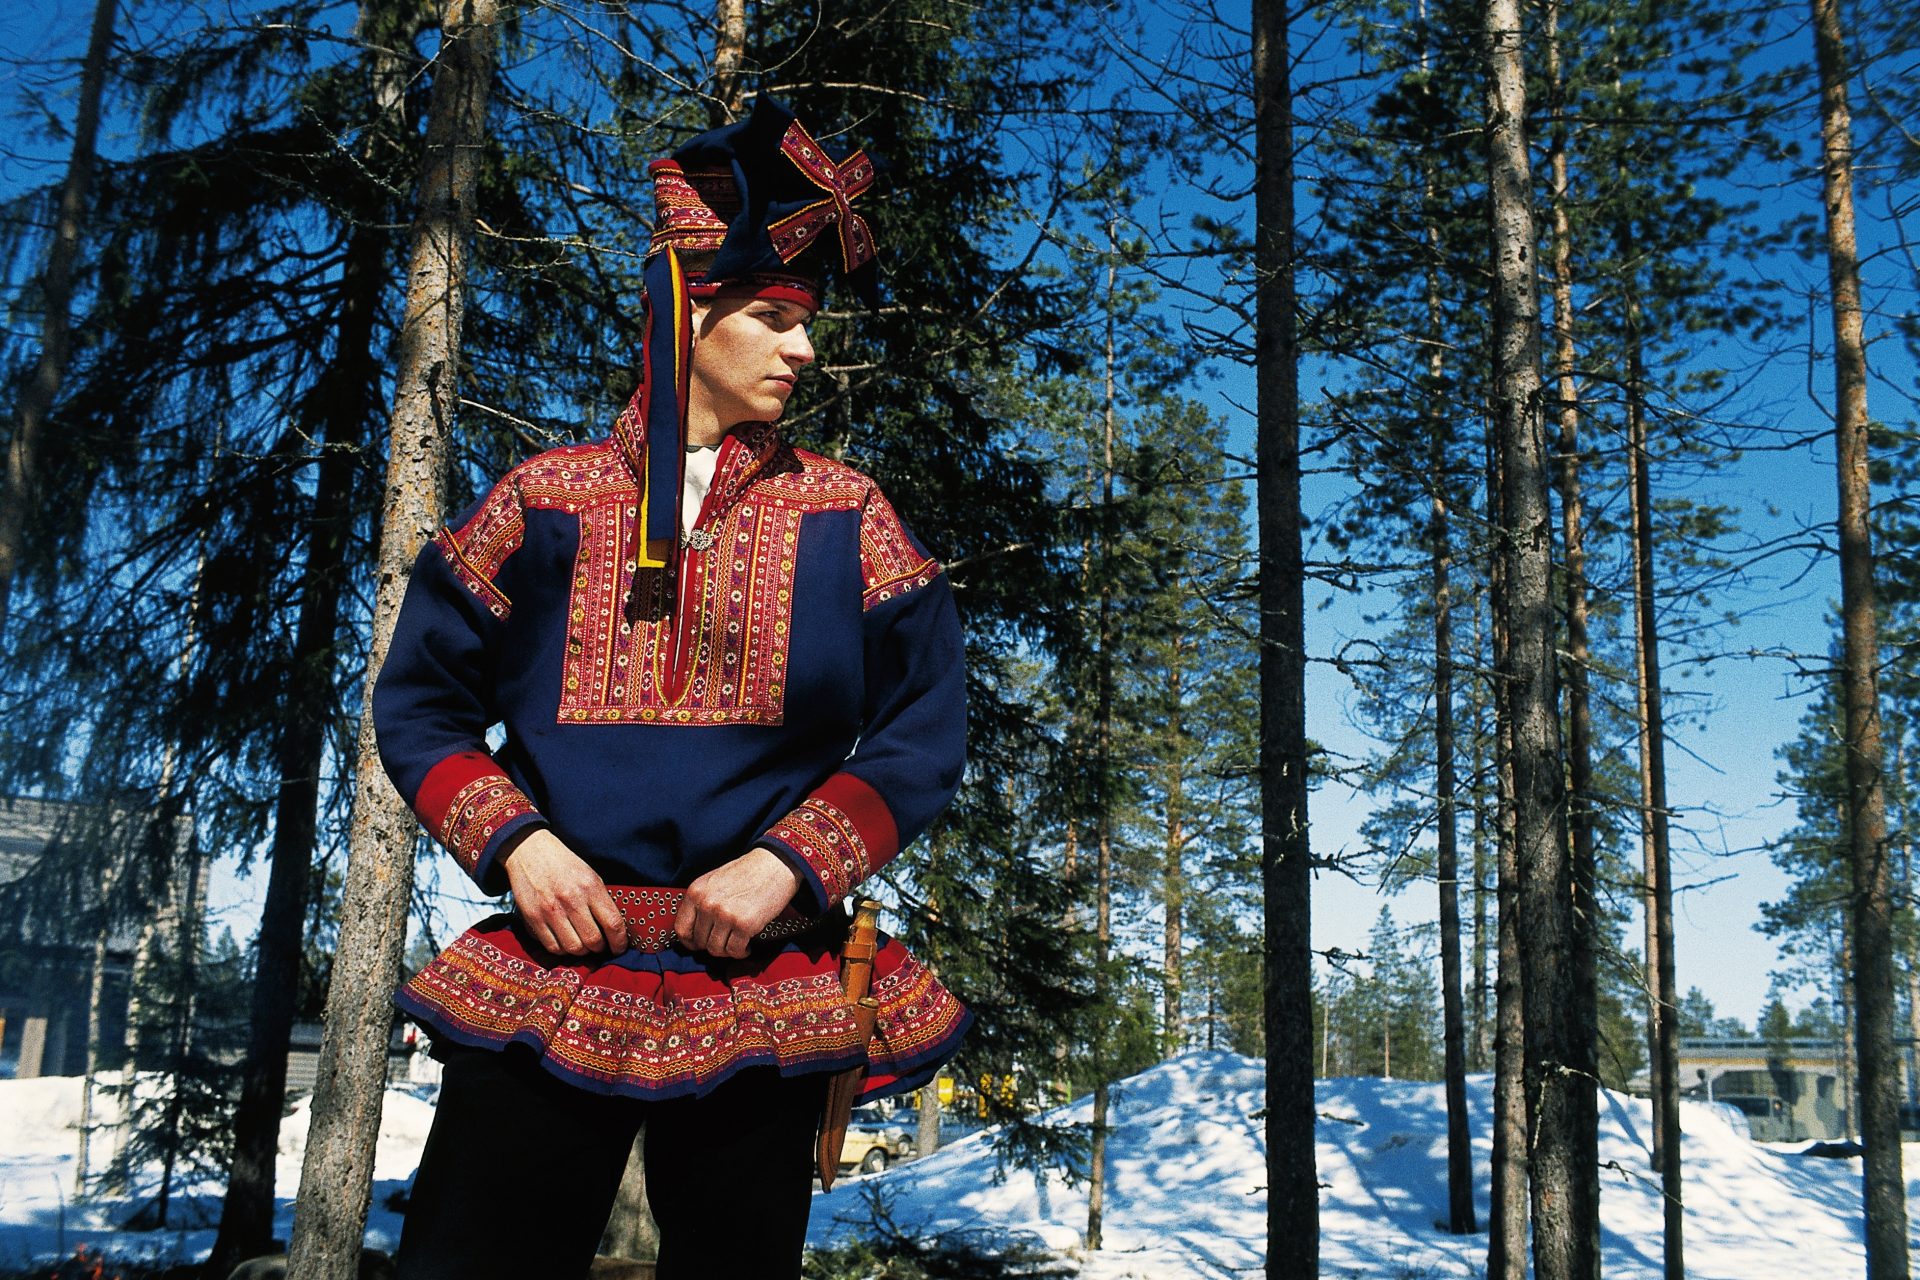 The Sámi people of Scandinavia